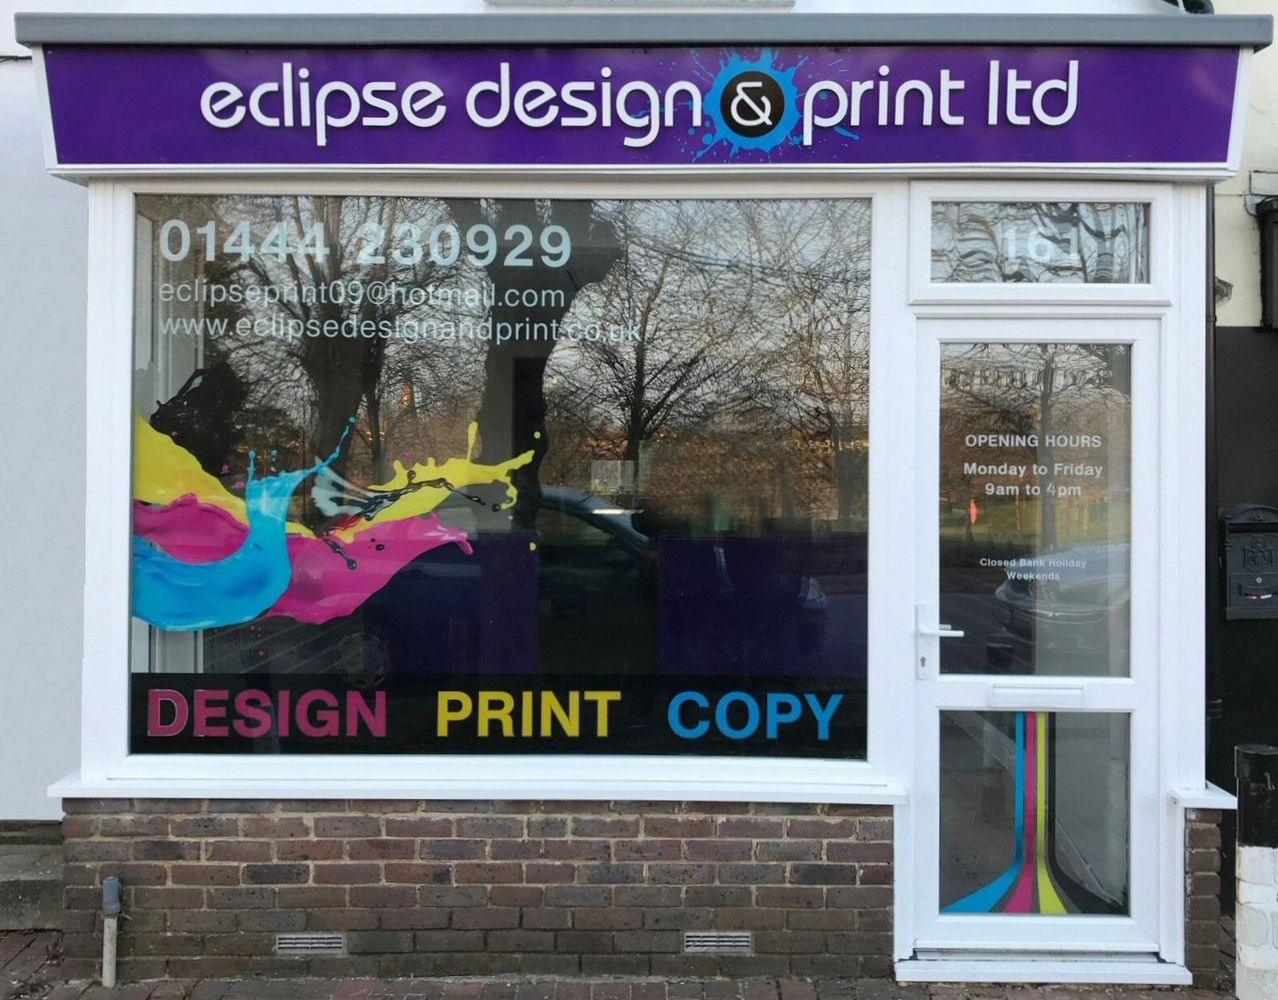 Design & Print - Print Shop, Printing,